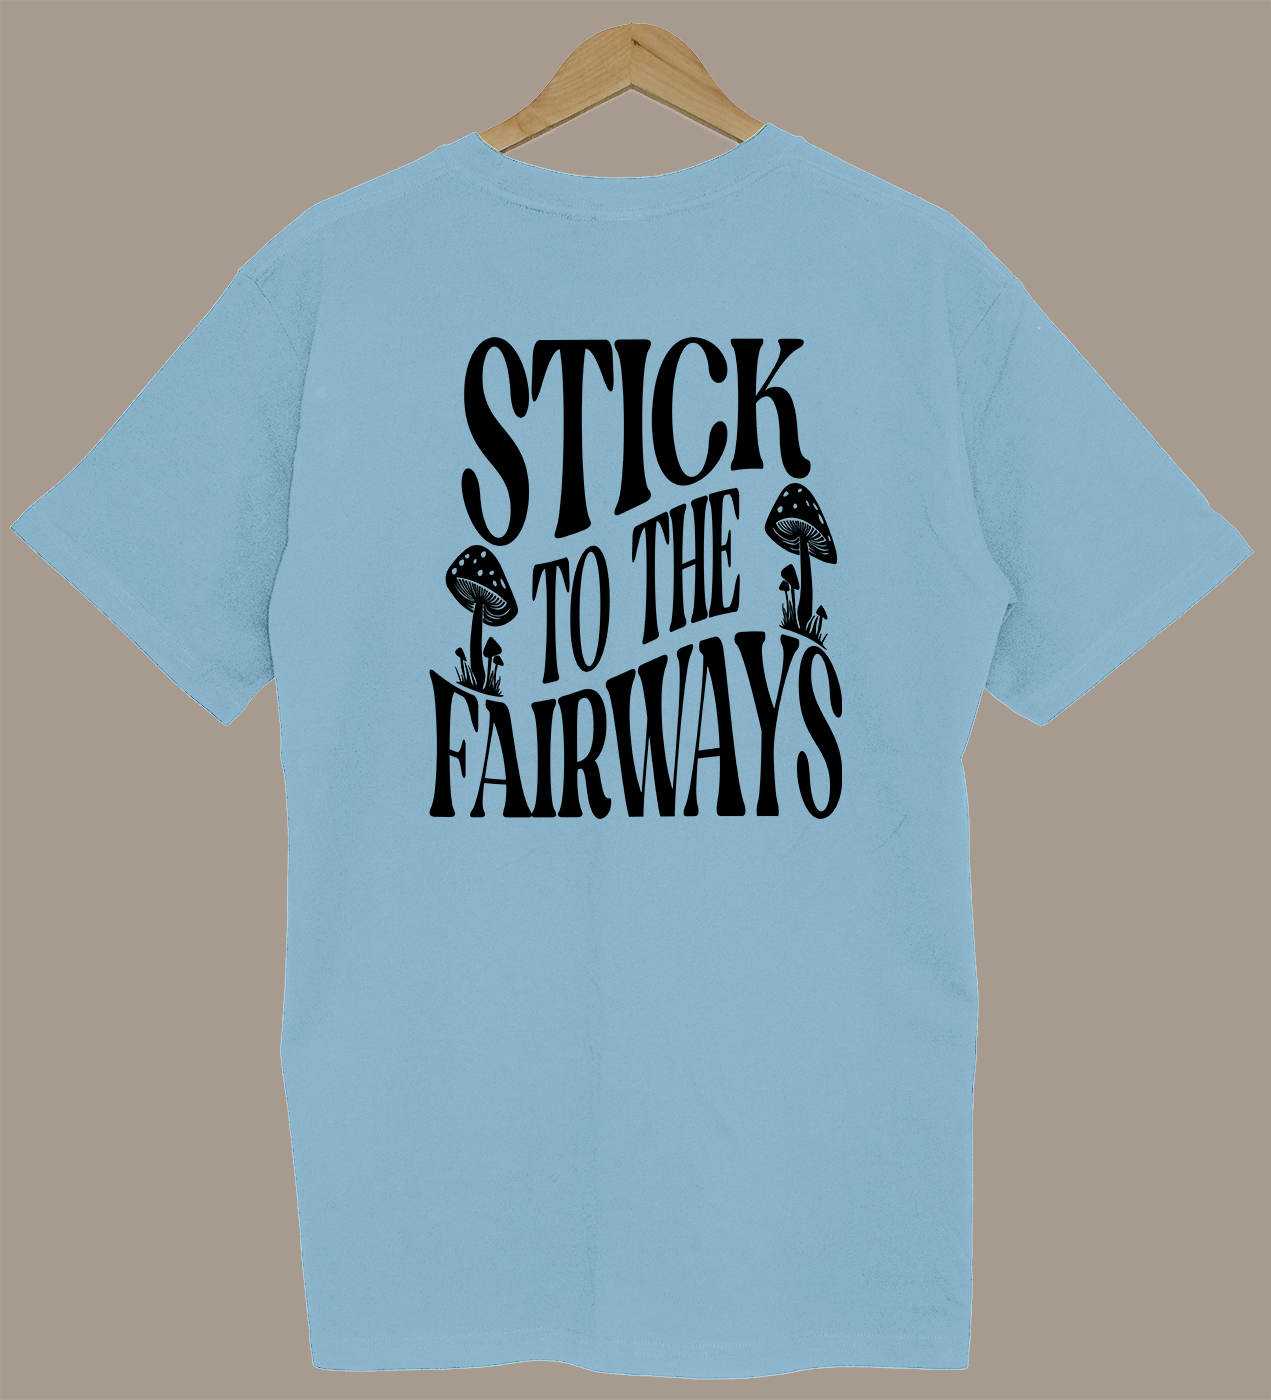 Stick To The Fairways - Blue/Black